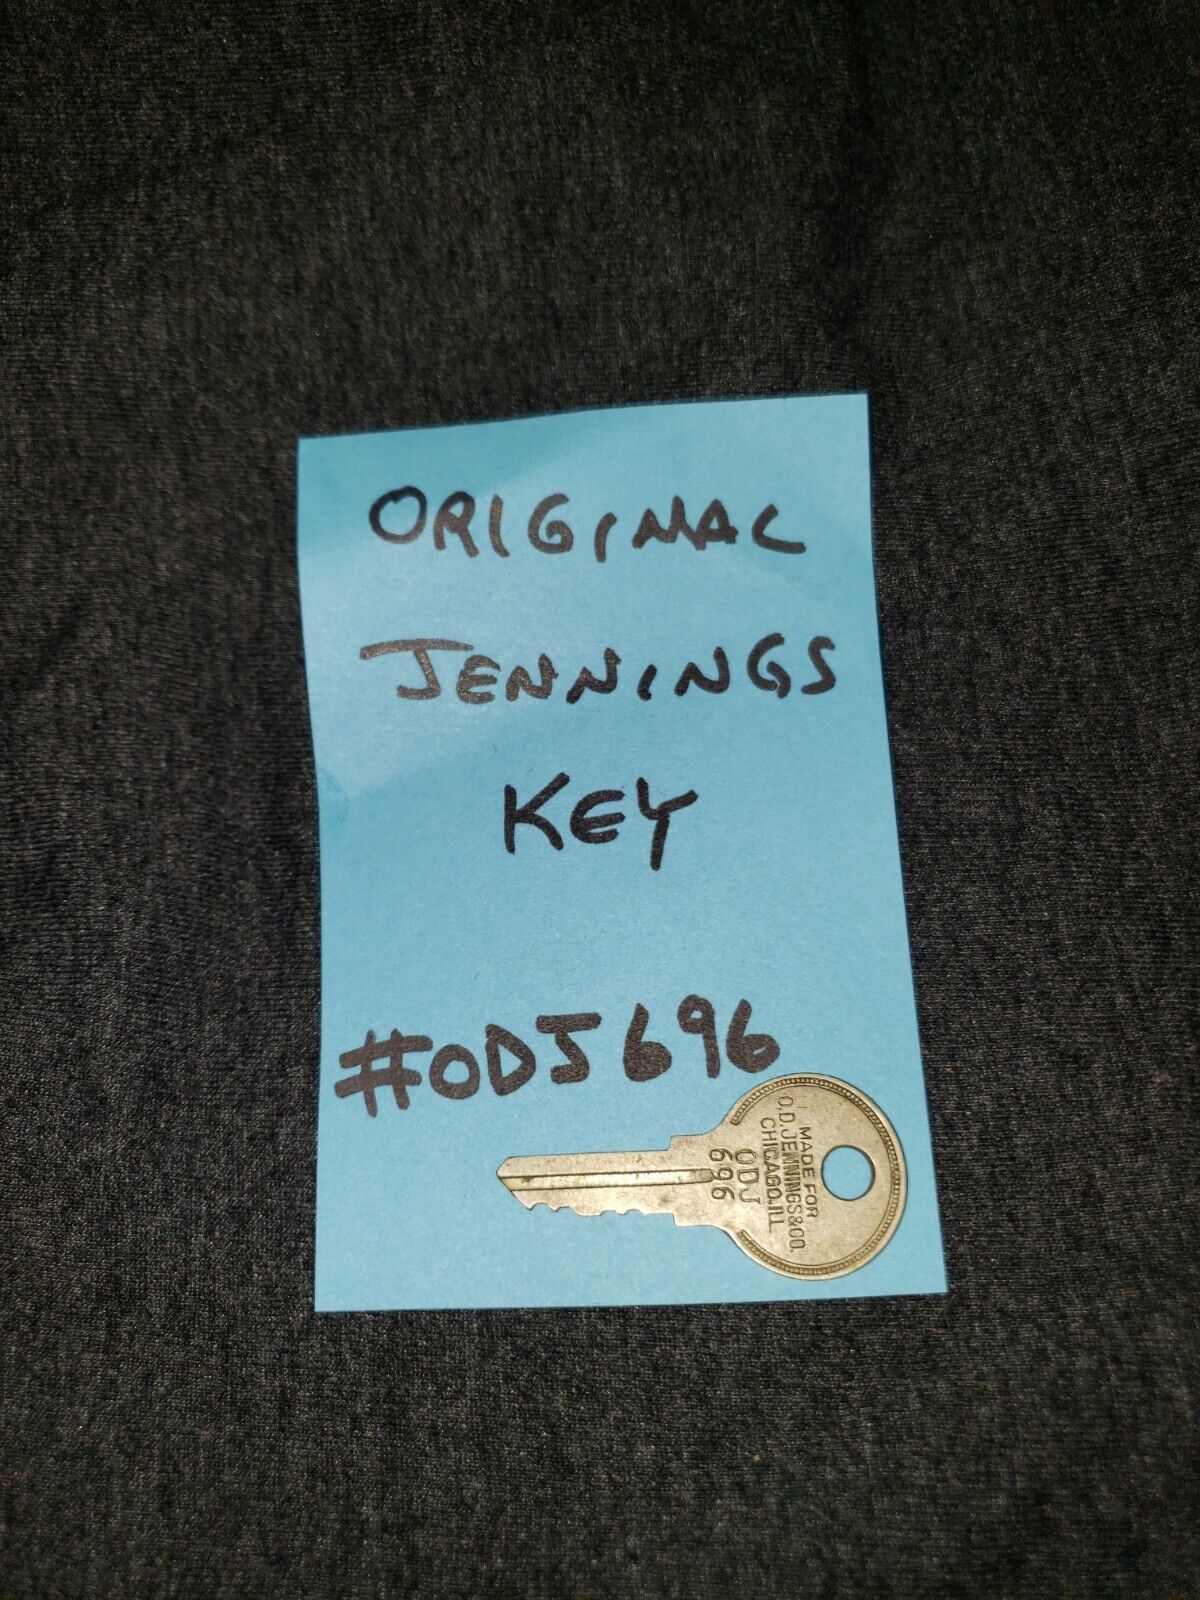 ORIGINAL KEY #ODJ696 FOR JENNINGS LOCK FOR ANTIQUE SLOT MACHINE ODJ #696